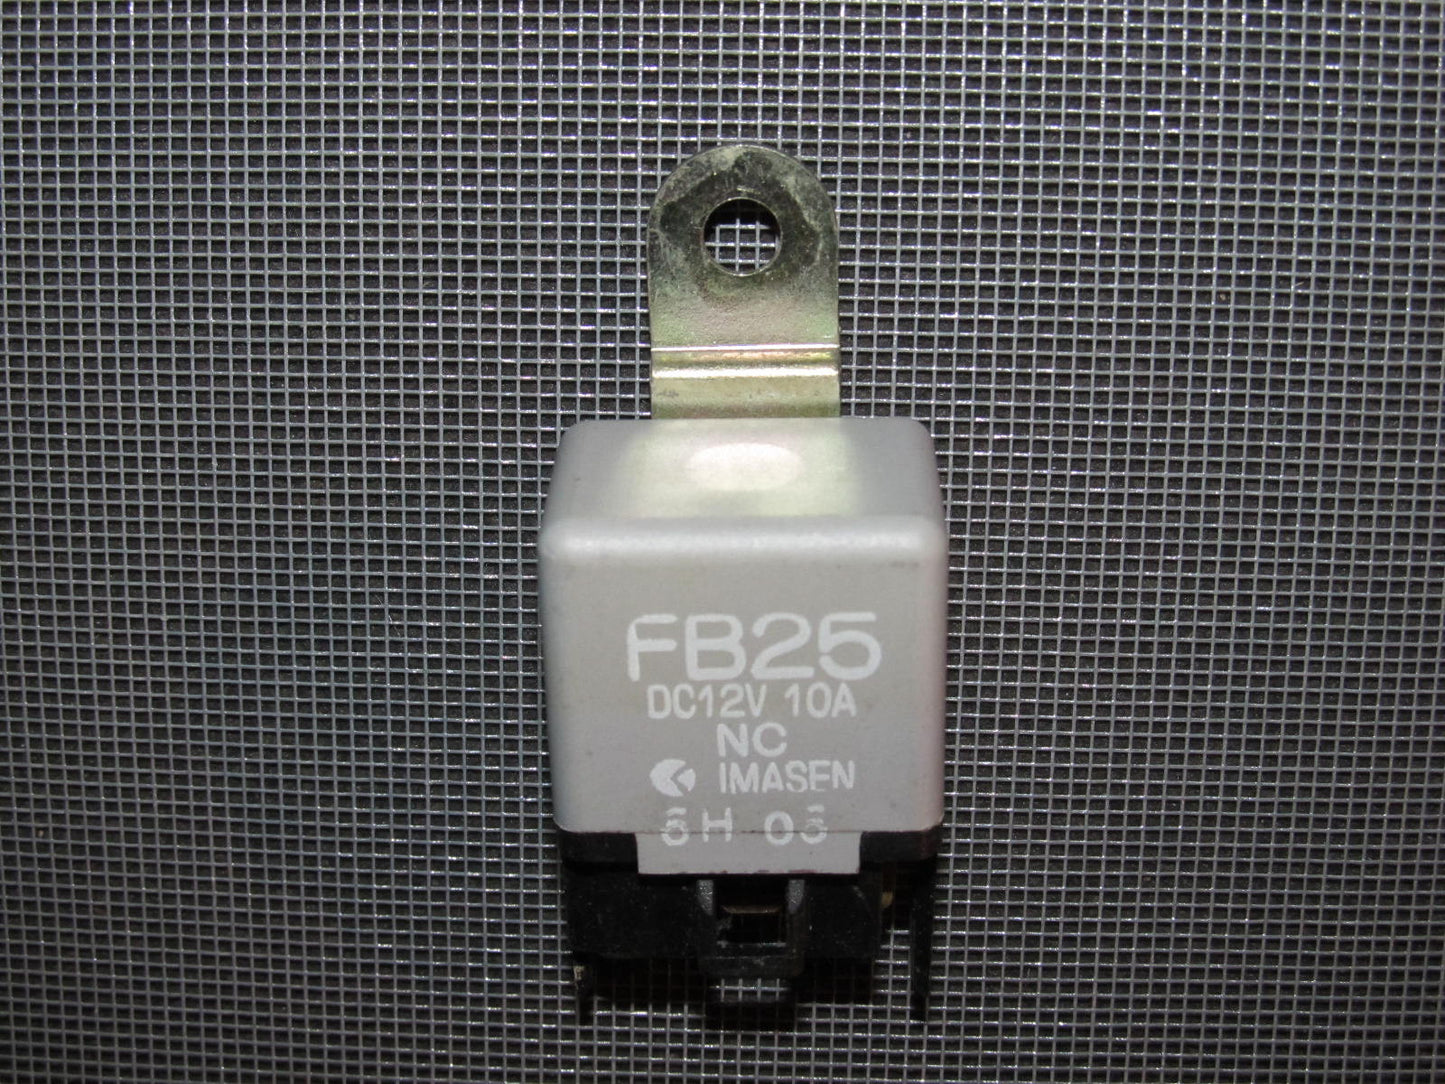 Universal Relay FB25 DC12V 10A